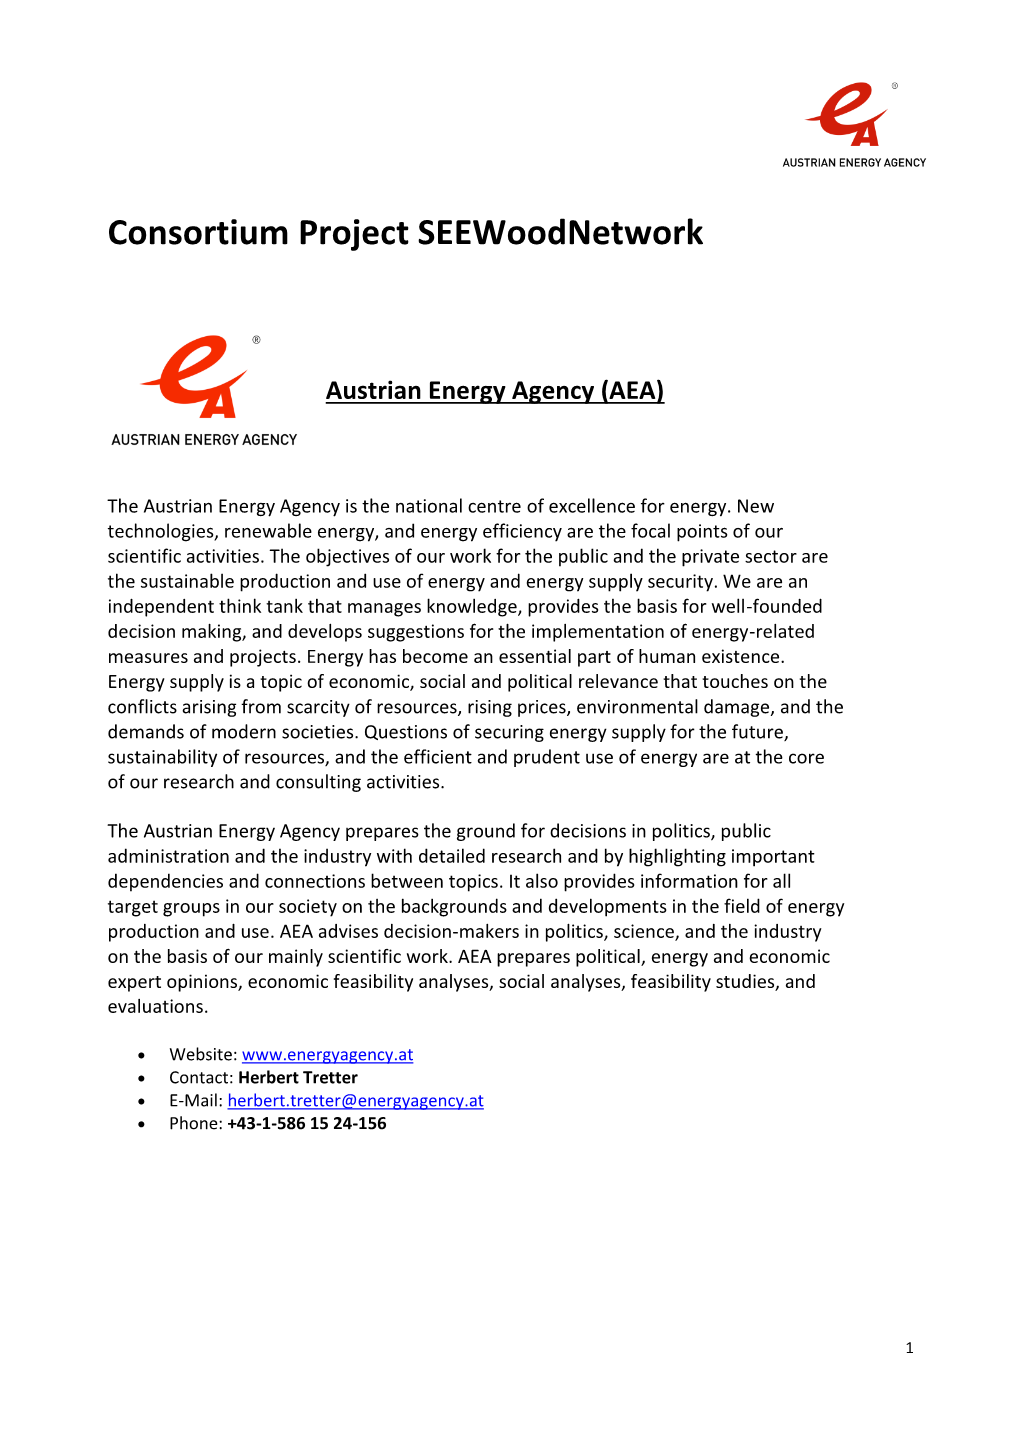 Consortium Seewoodnetwork